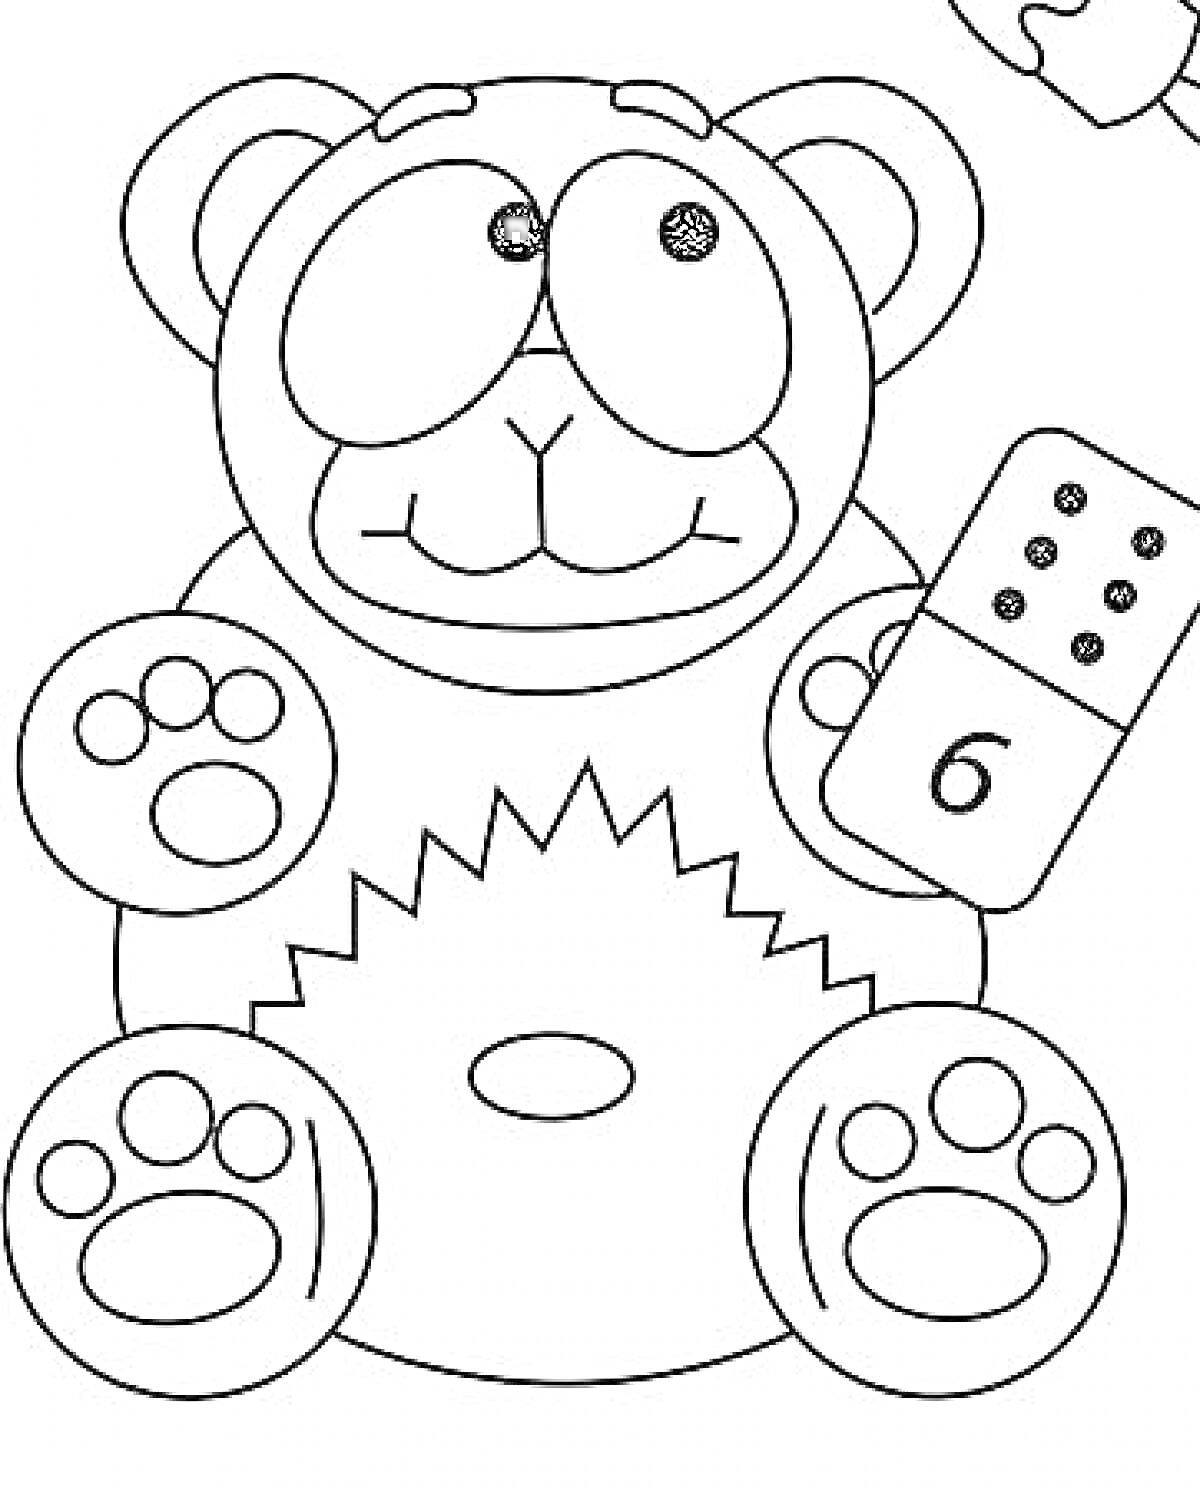 На раскраске изображено: Медведь, Цифра 6, Лапы, Крысы